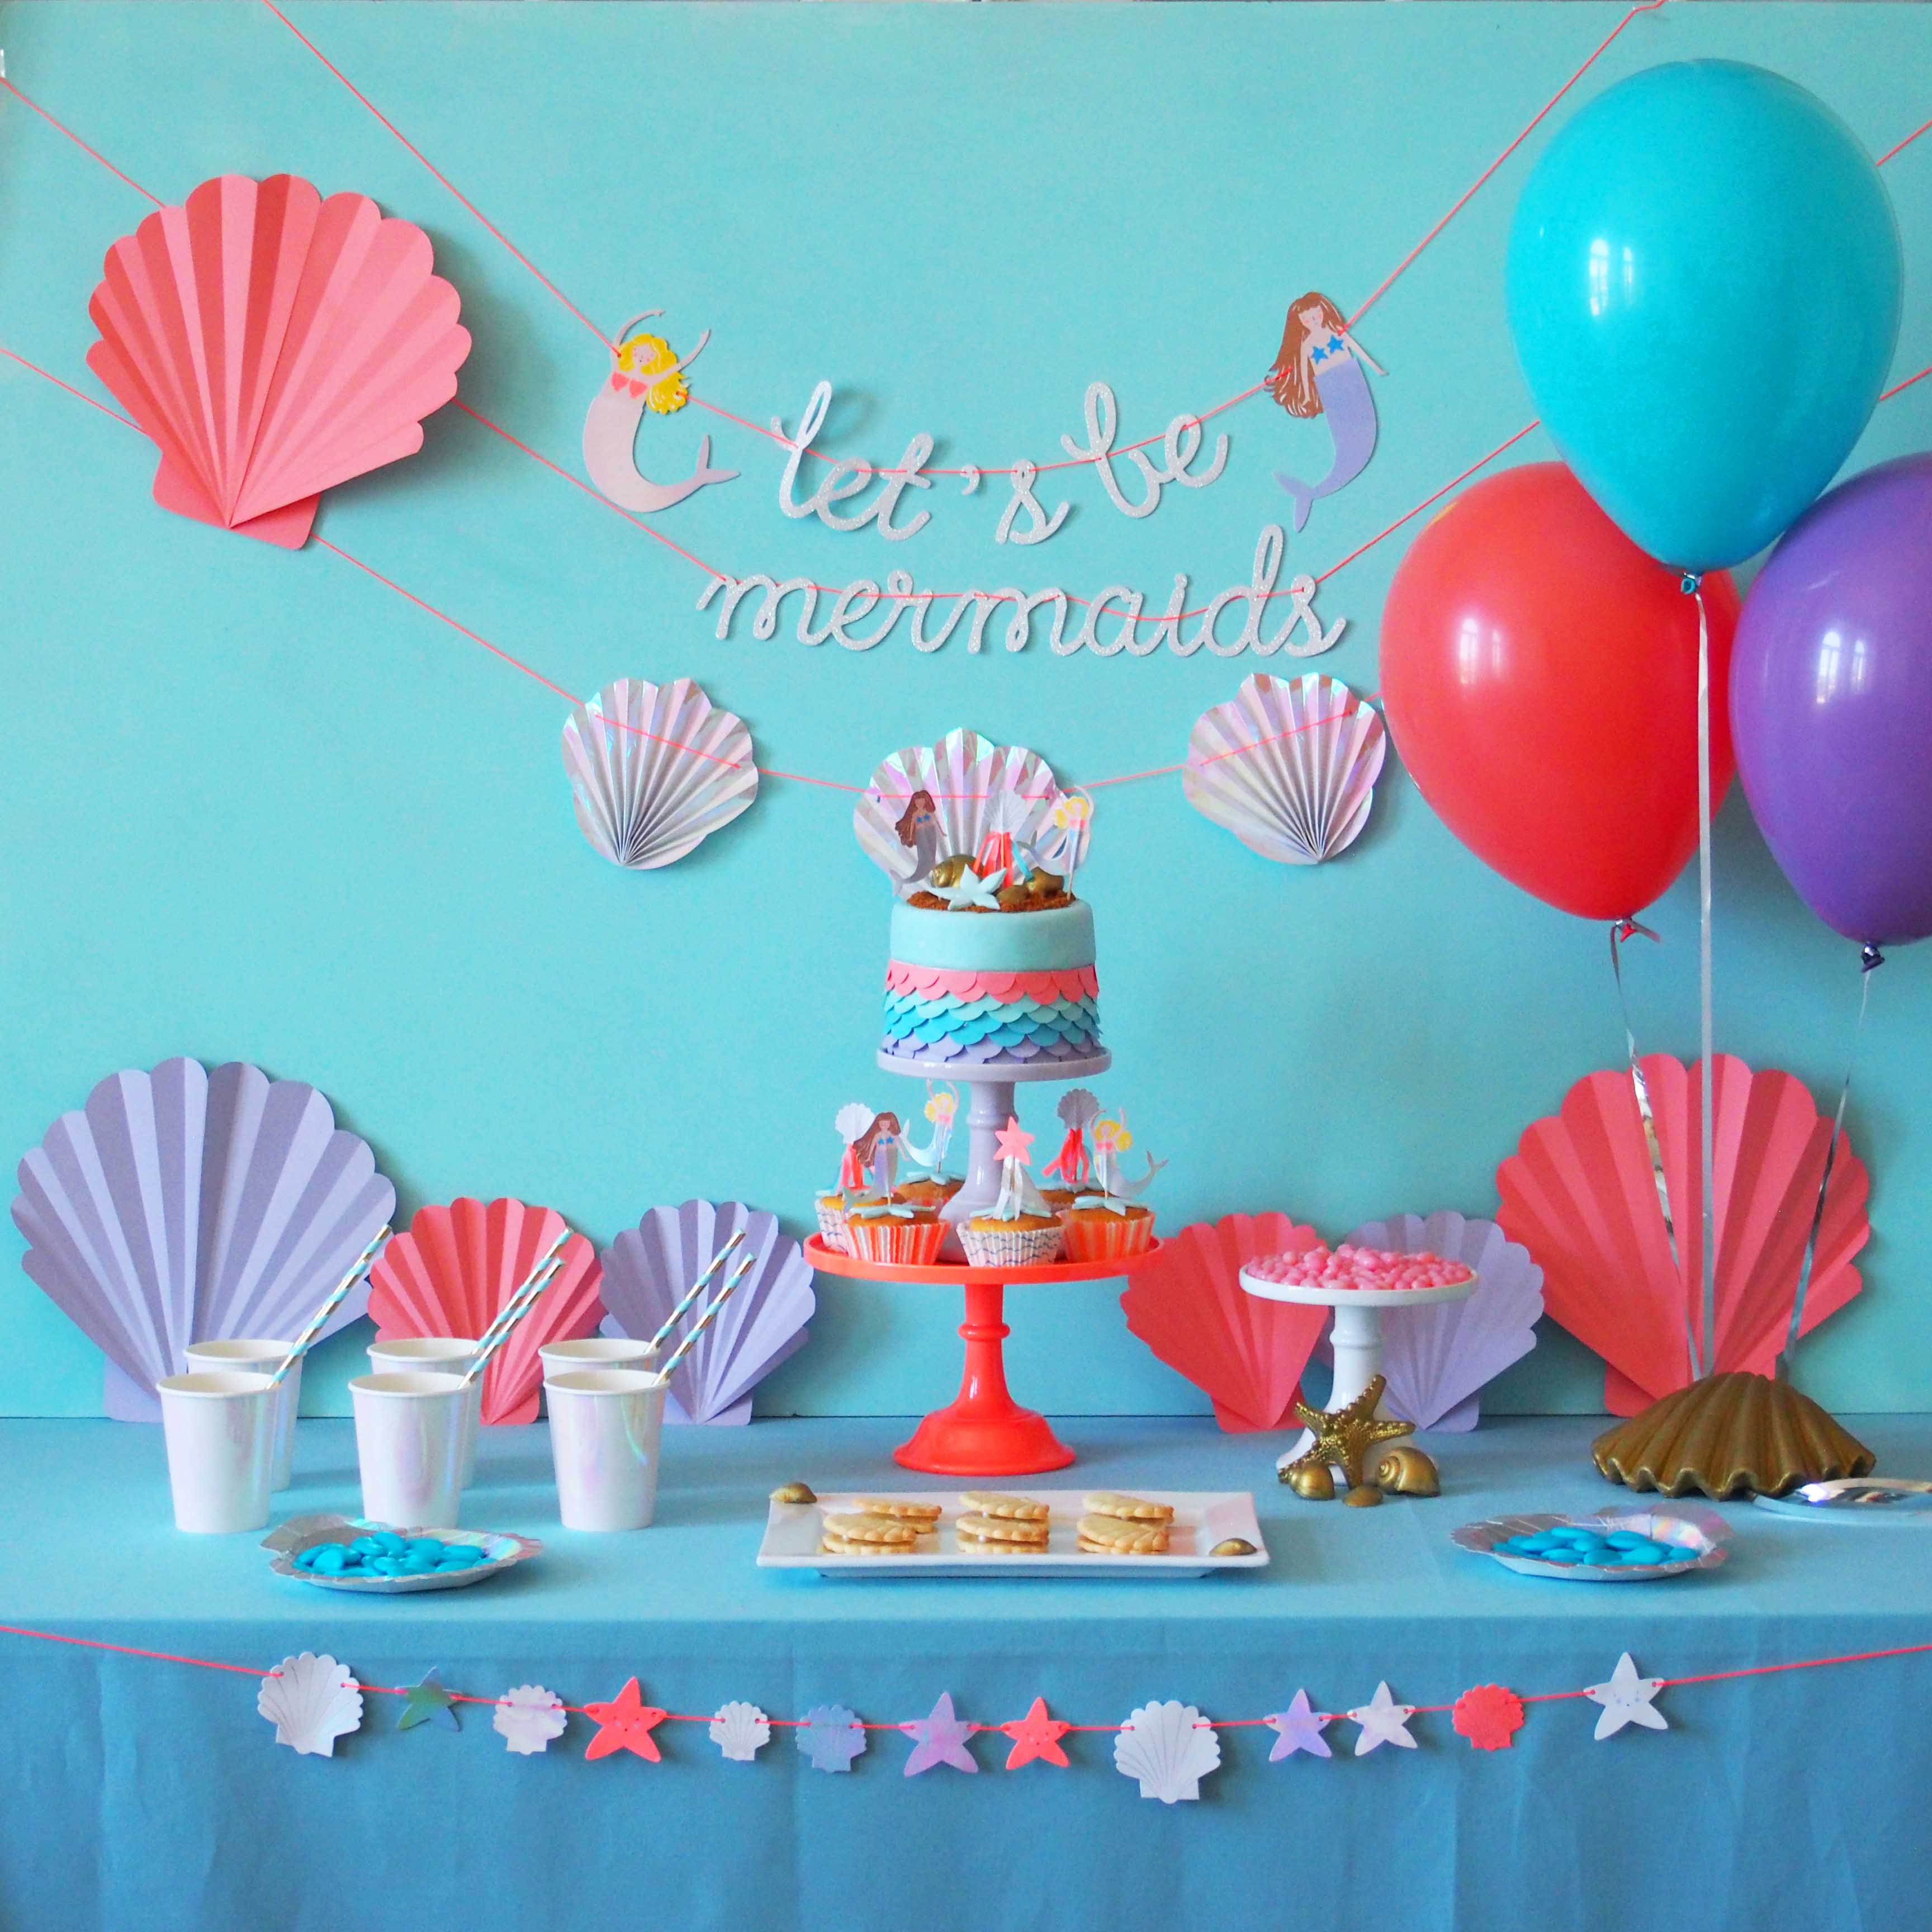 Let's be mermaids – Rose Caramelle – Carnet d'inspiration